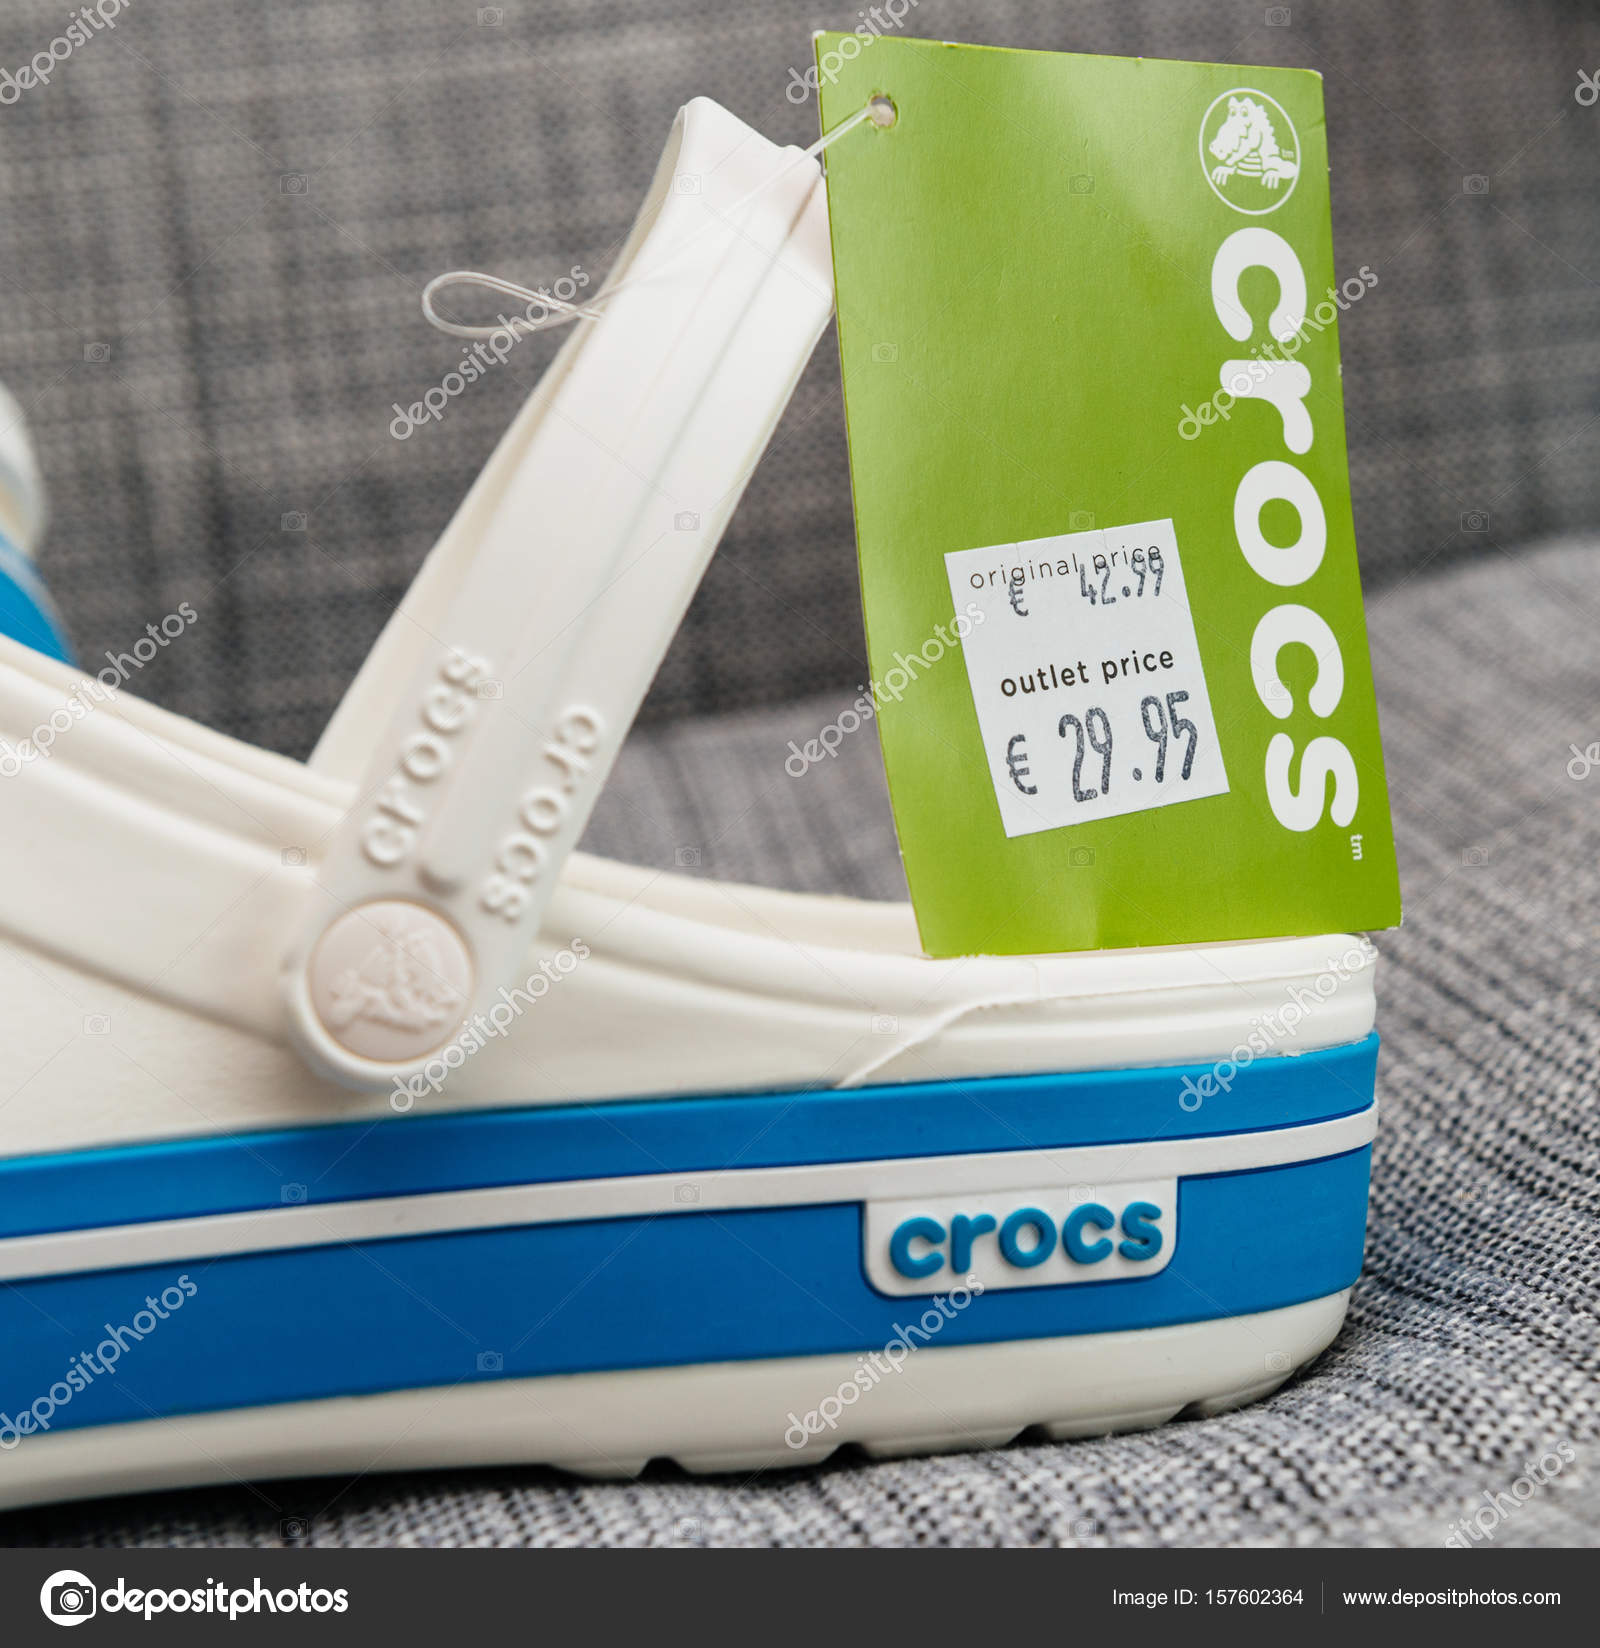 price of crocs shoes